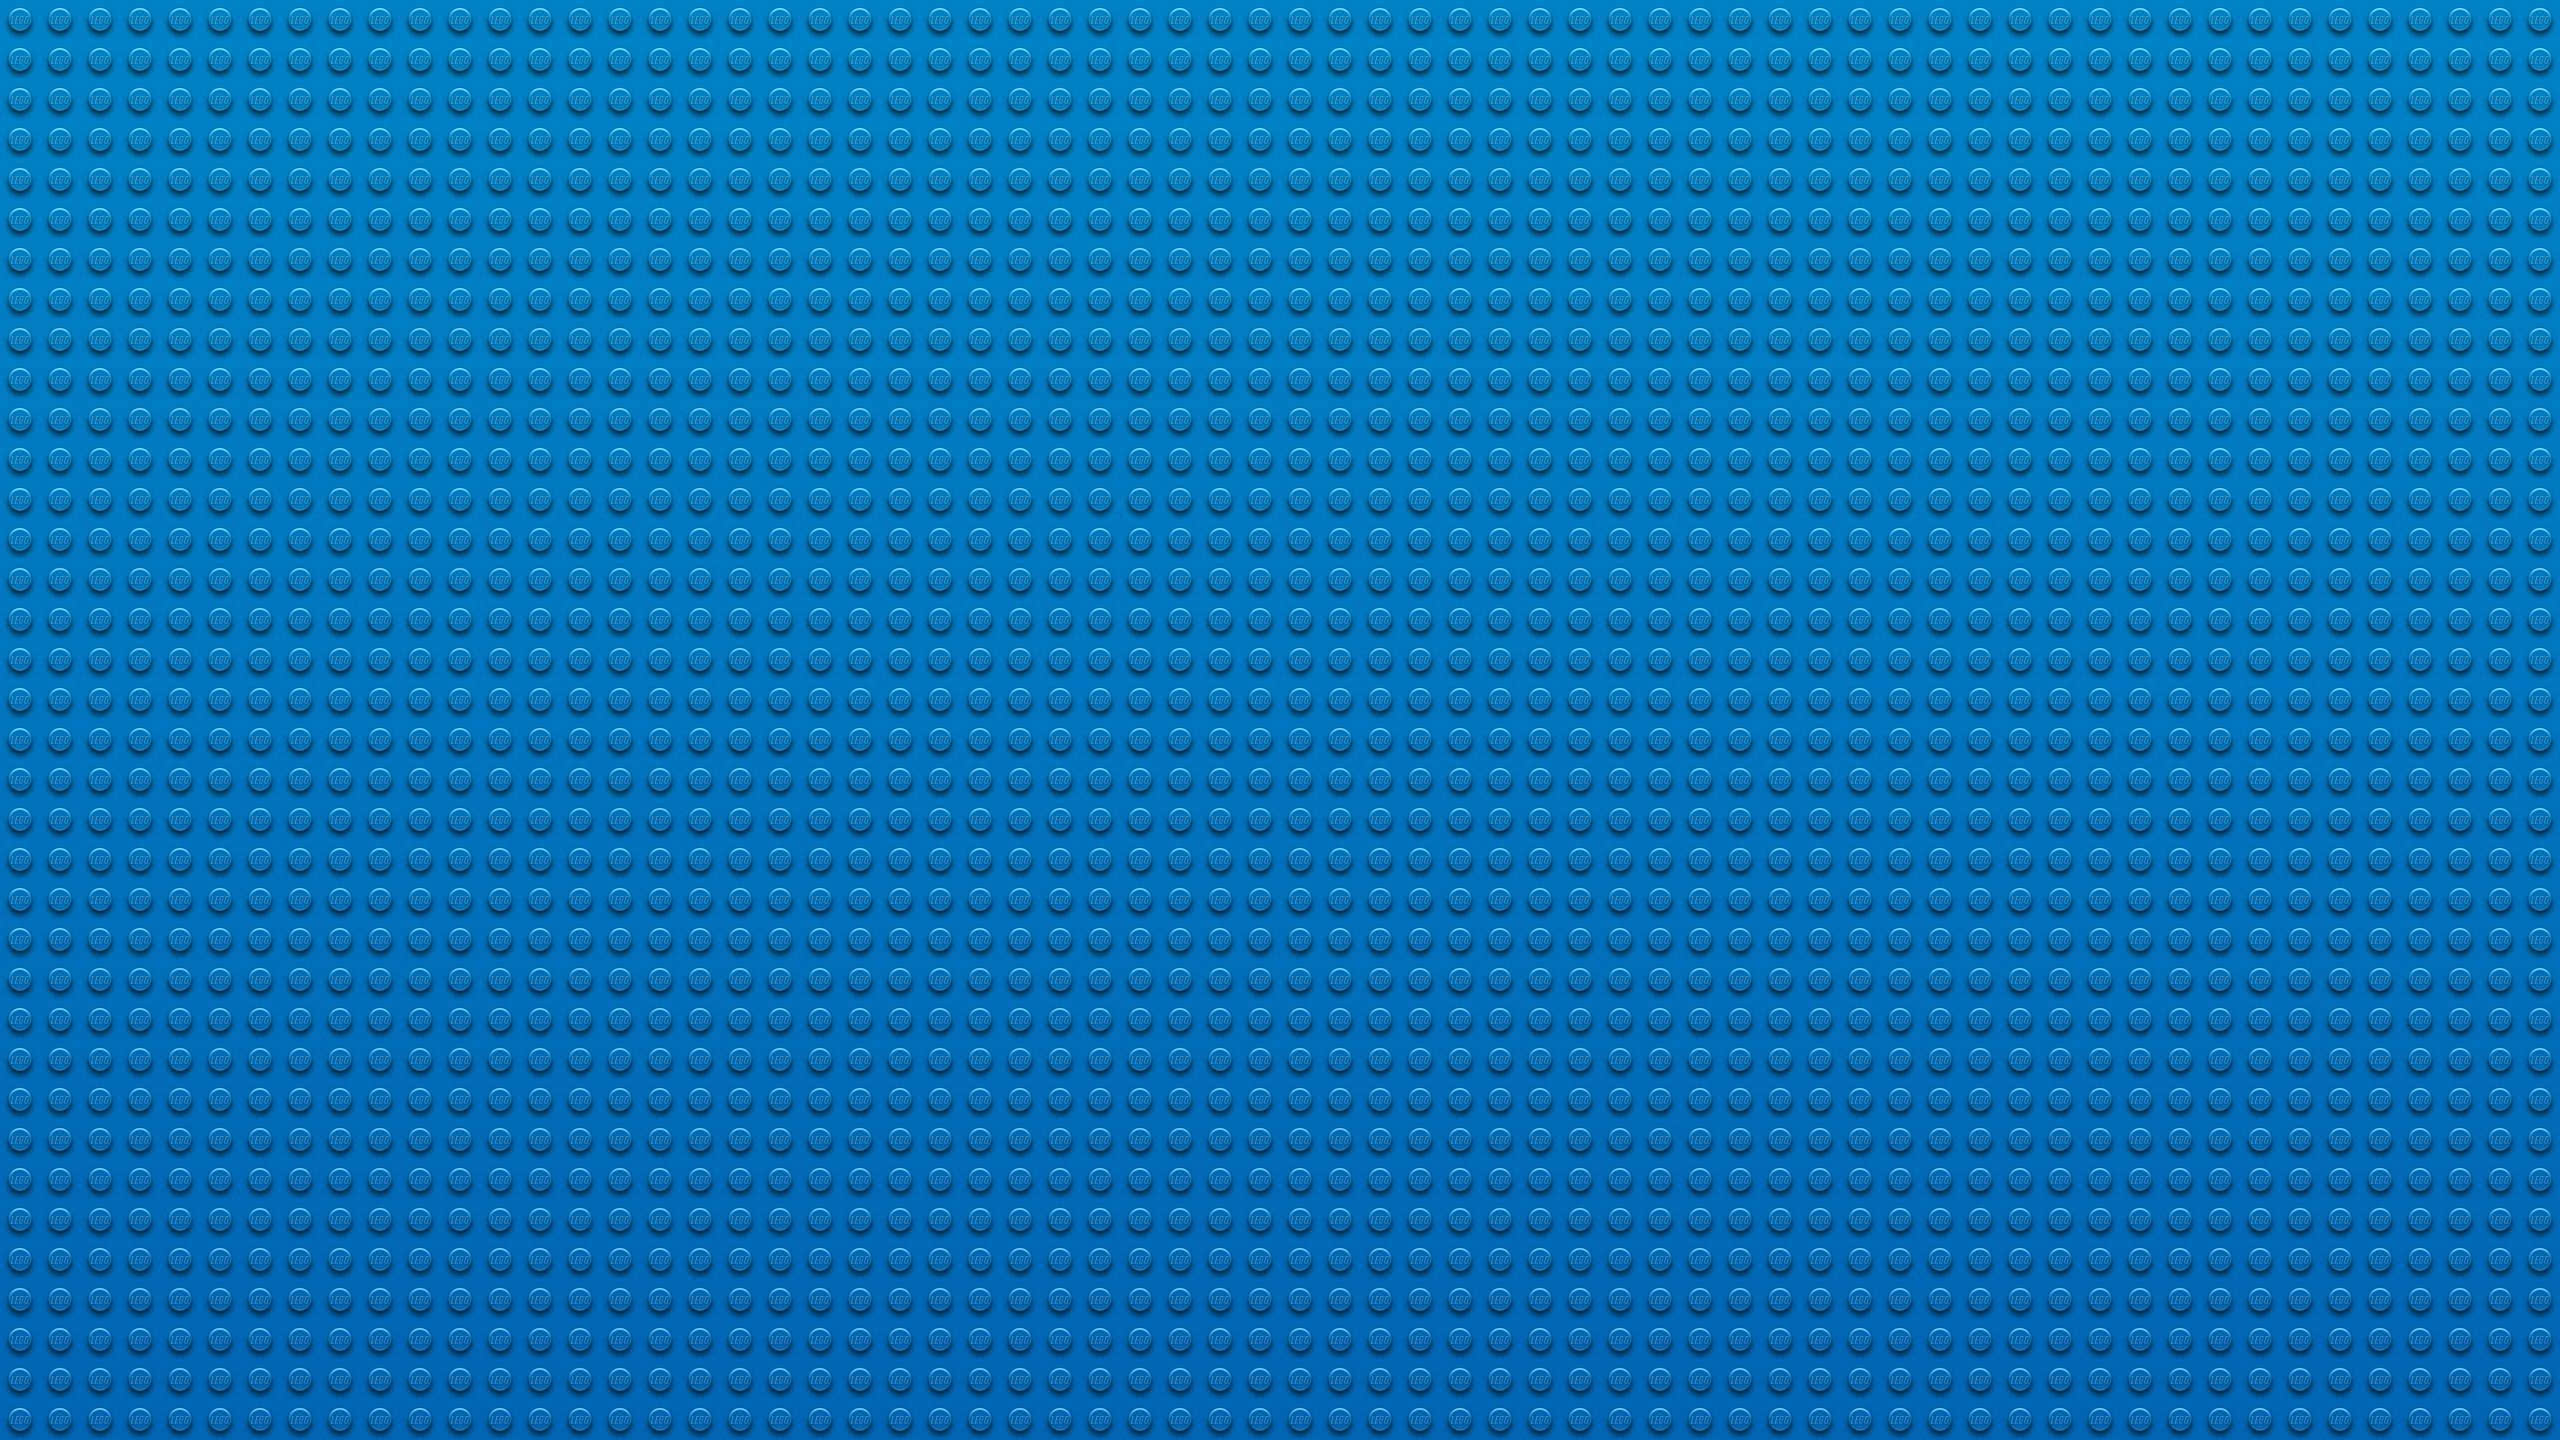 lego background wqhd 1440p wallpaper